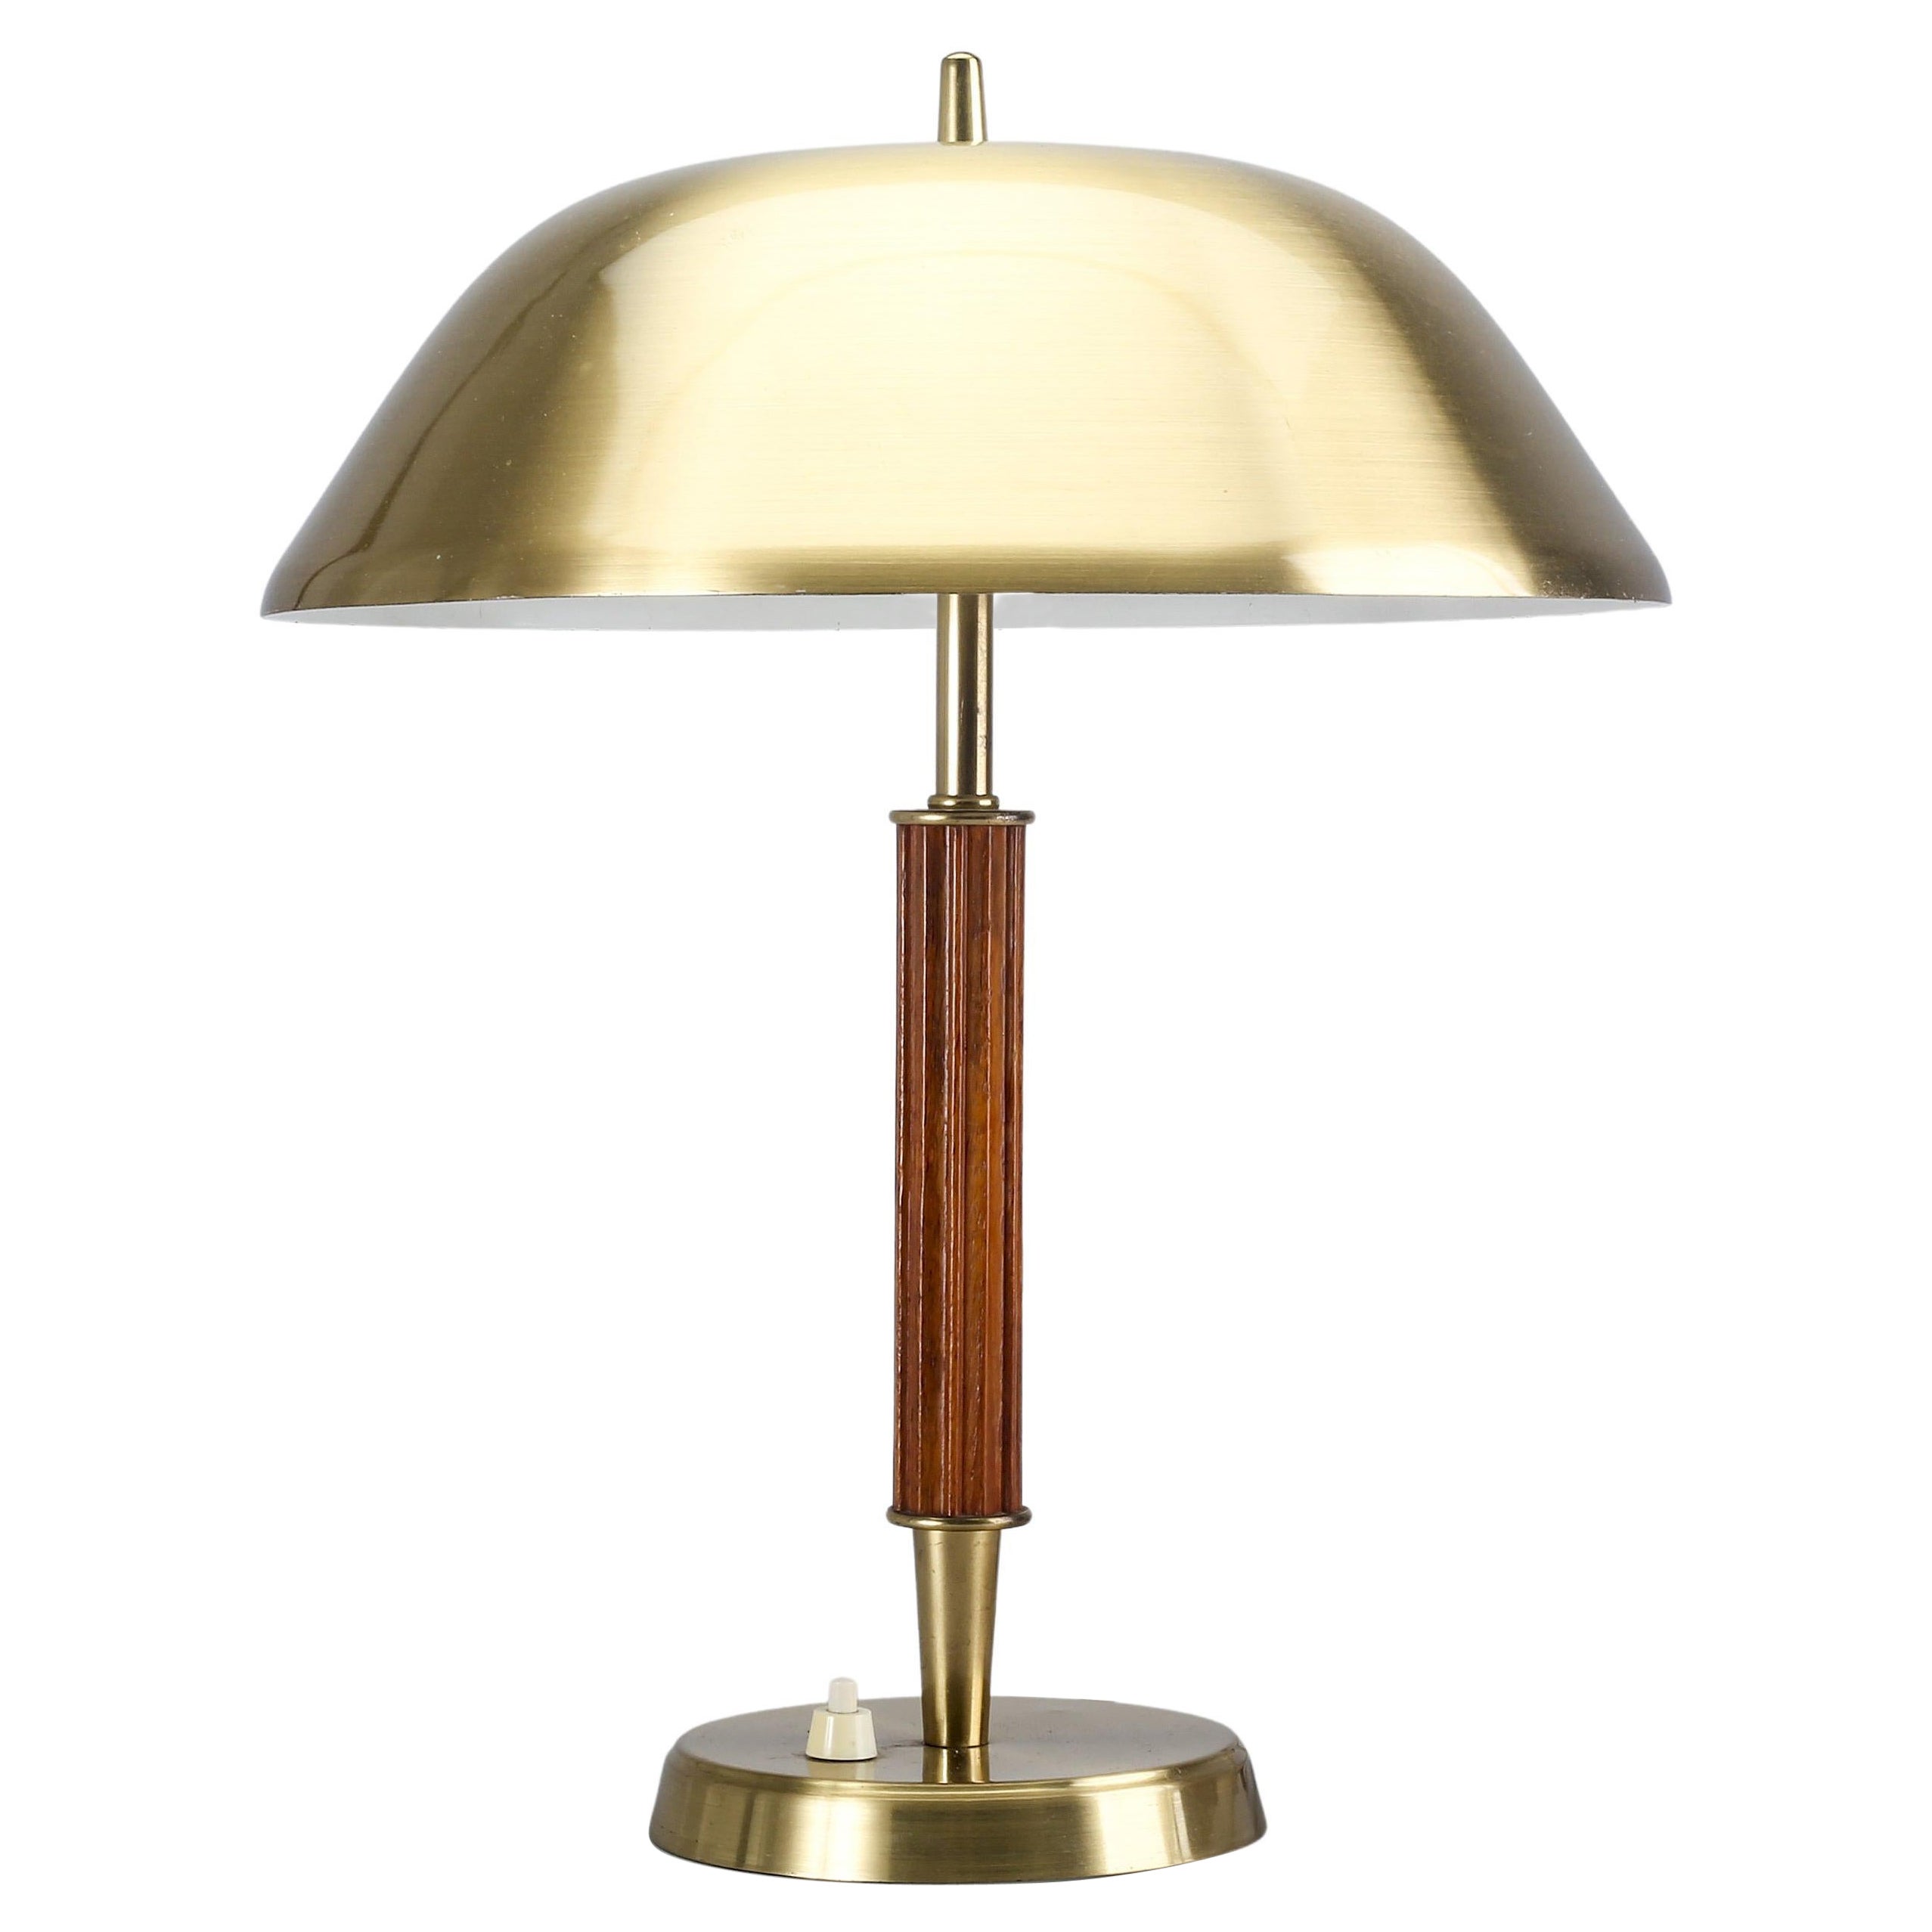 Swedish Modern Table Lamp, Brass, Teak, 1950s